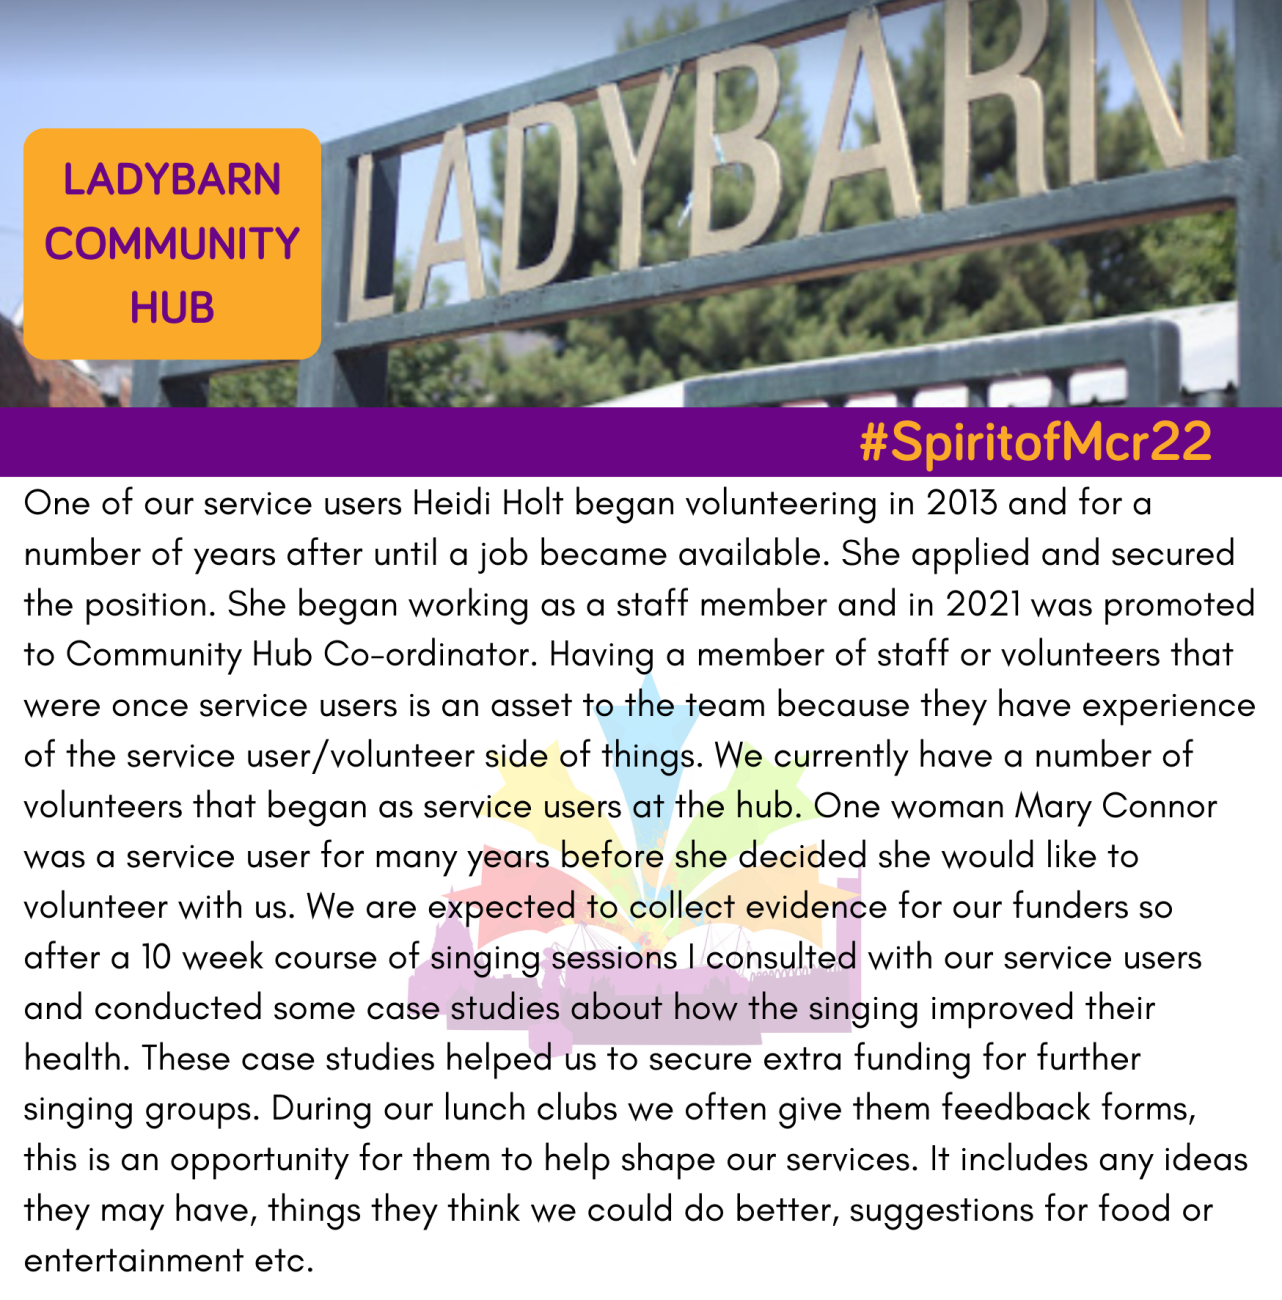 Ladybarn community hub